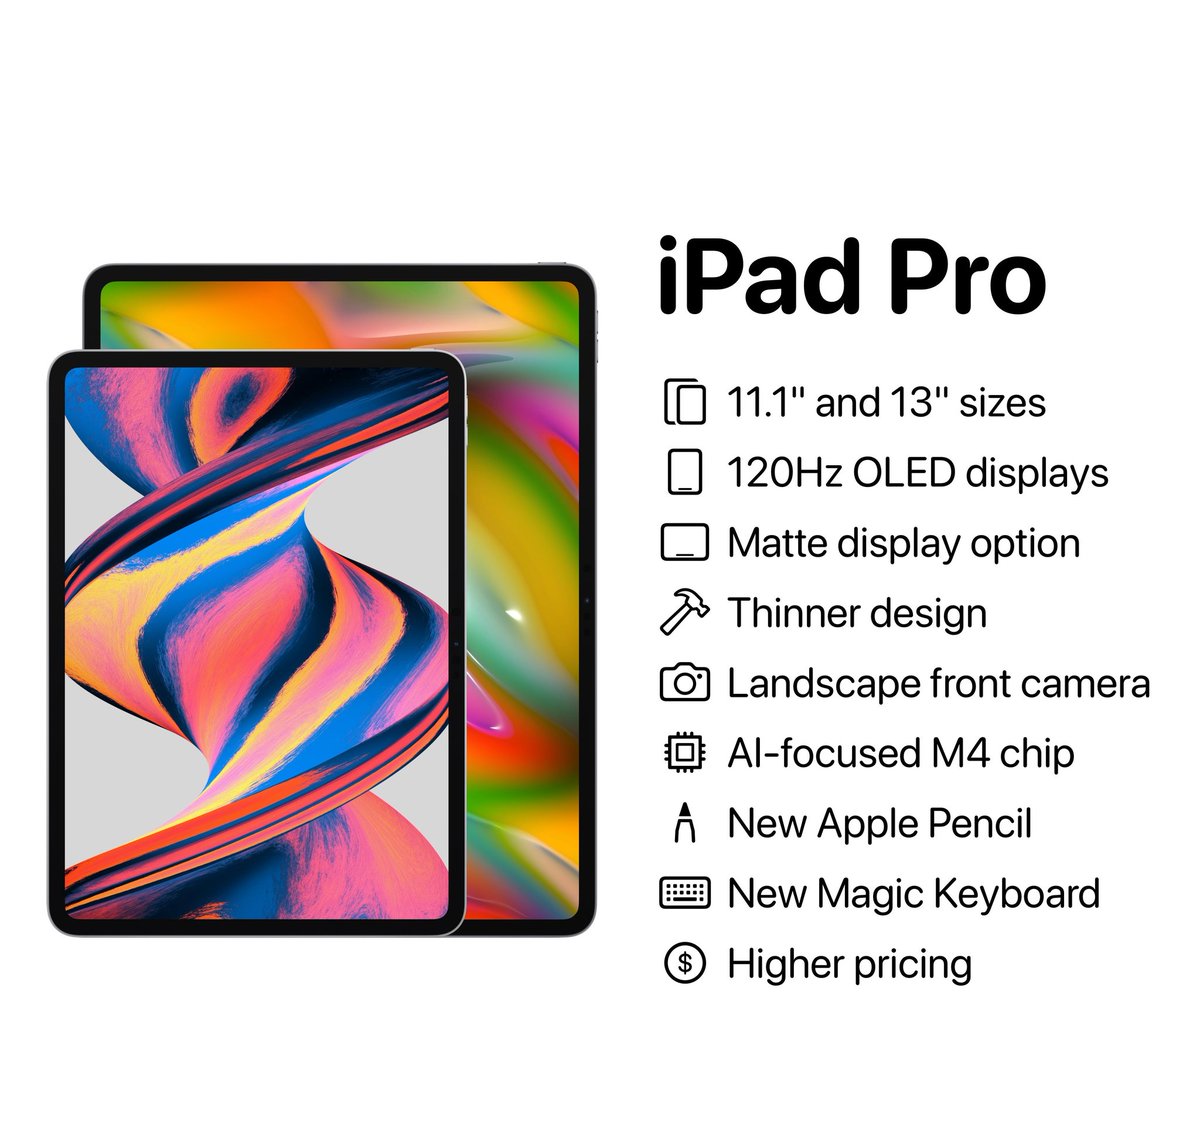 iPad Pro  specification based on rumors
#ipadpro #ipad #apple #ios18